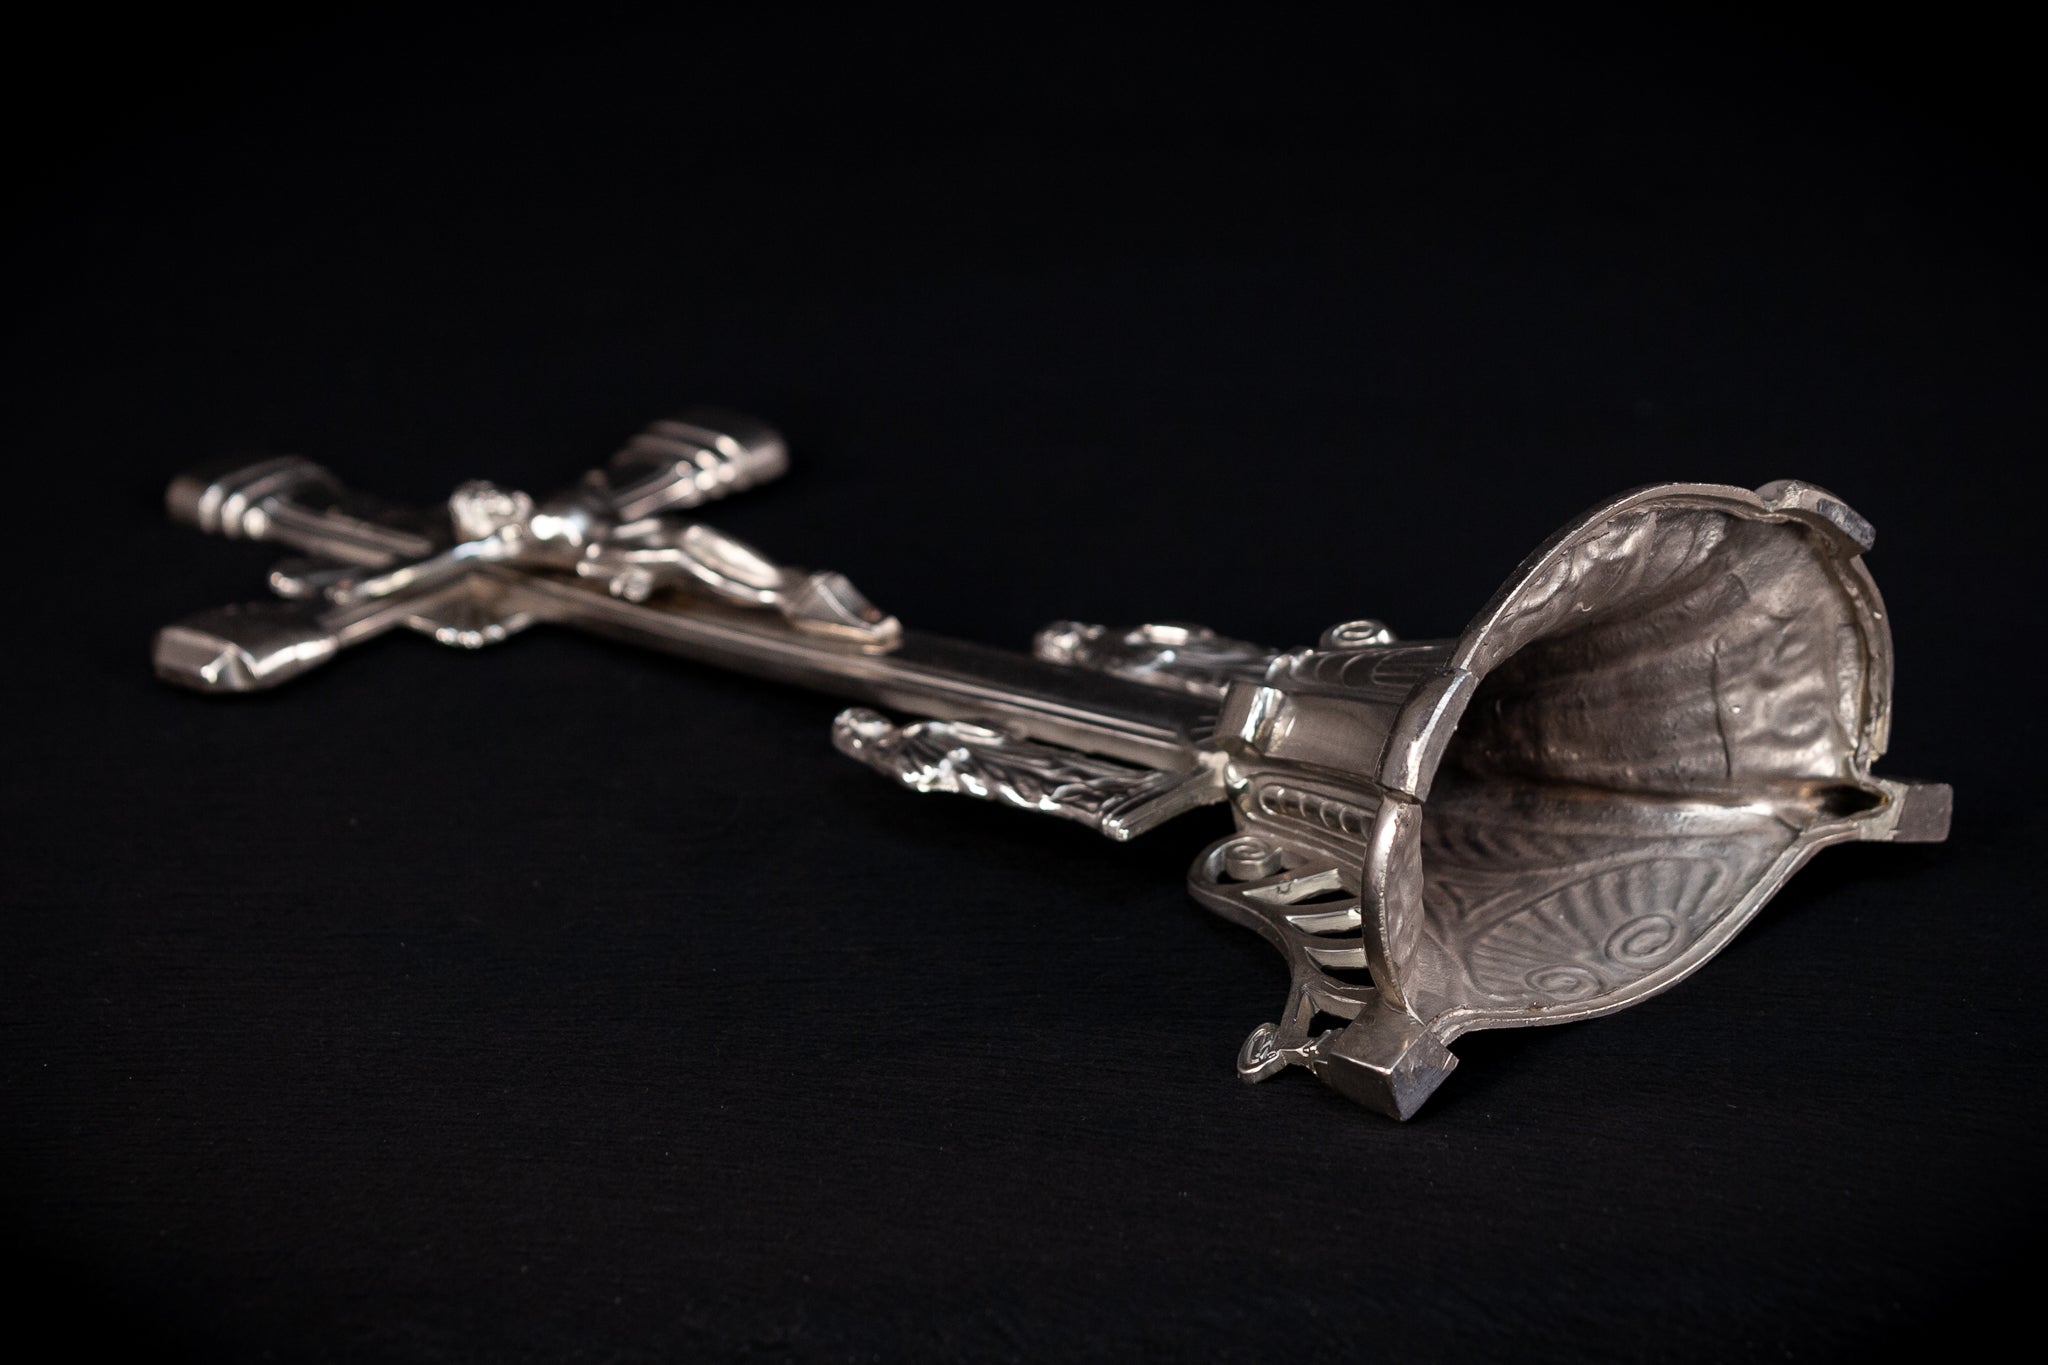 Altar Crucifix | Silvered Metal  | 16.1”